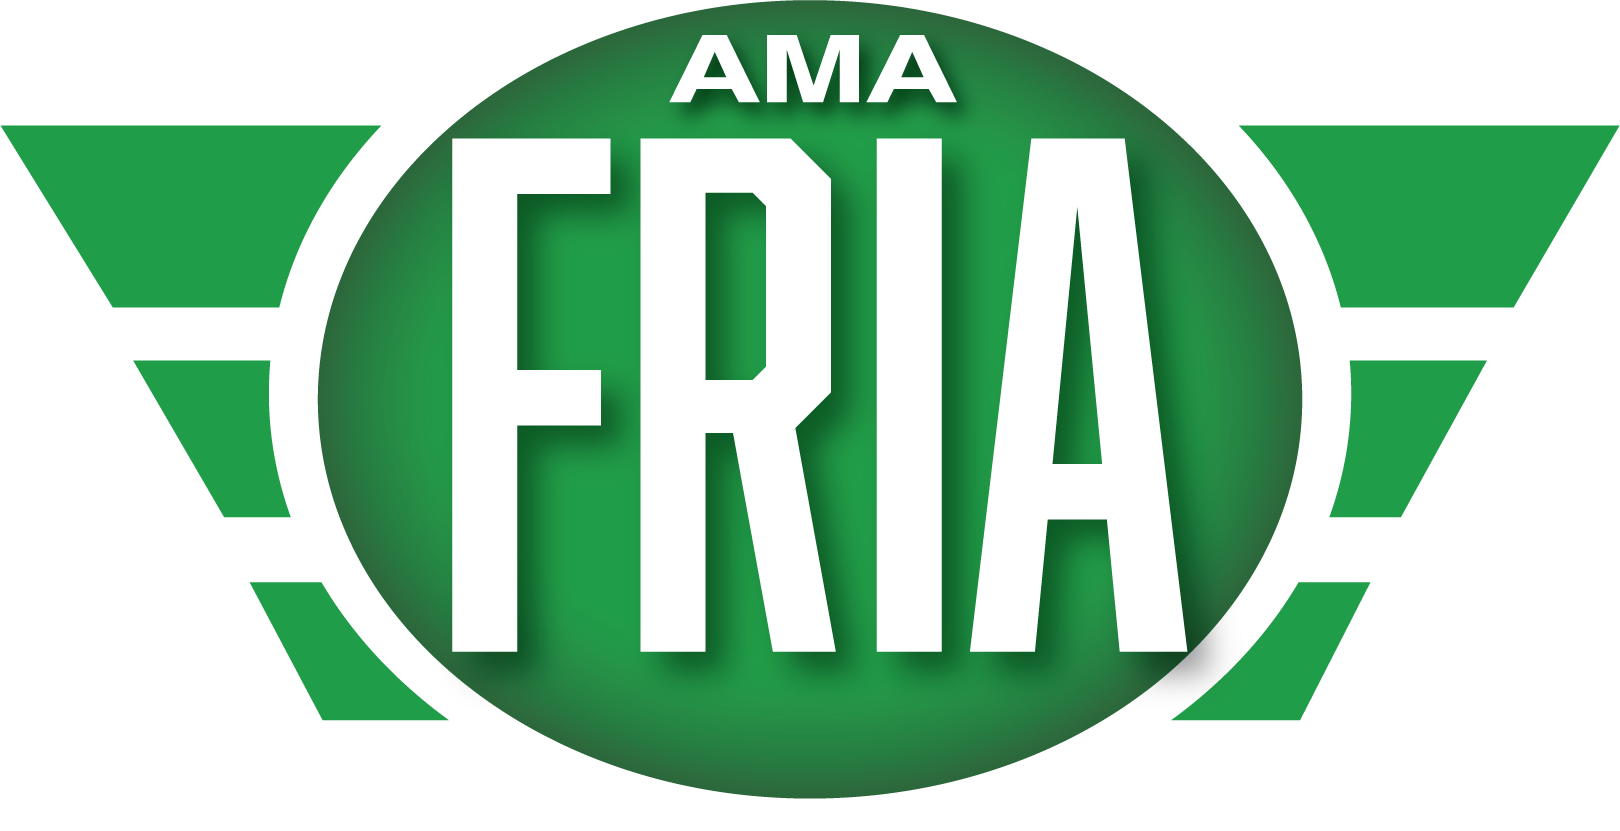 AMA FRIA logo